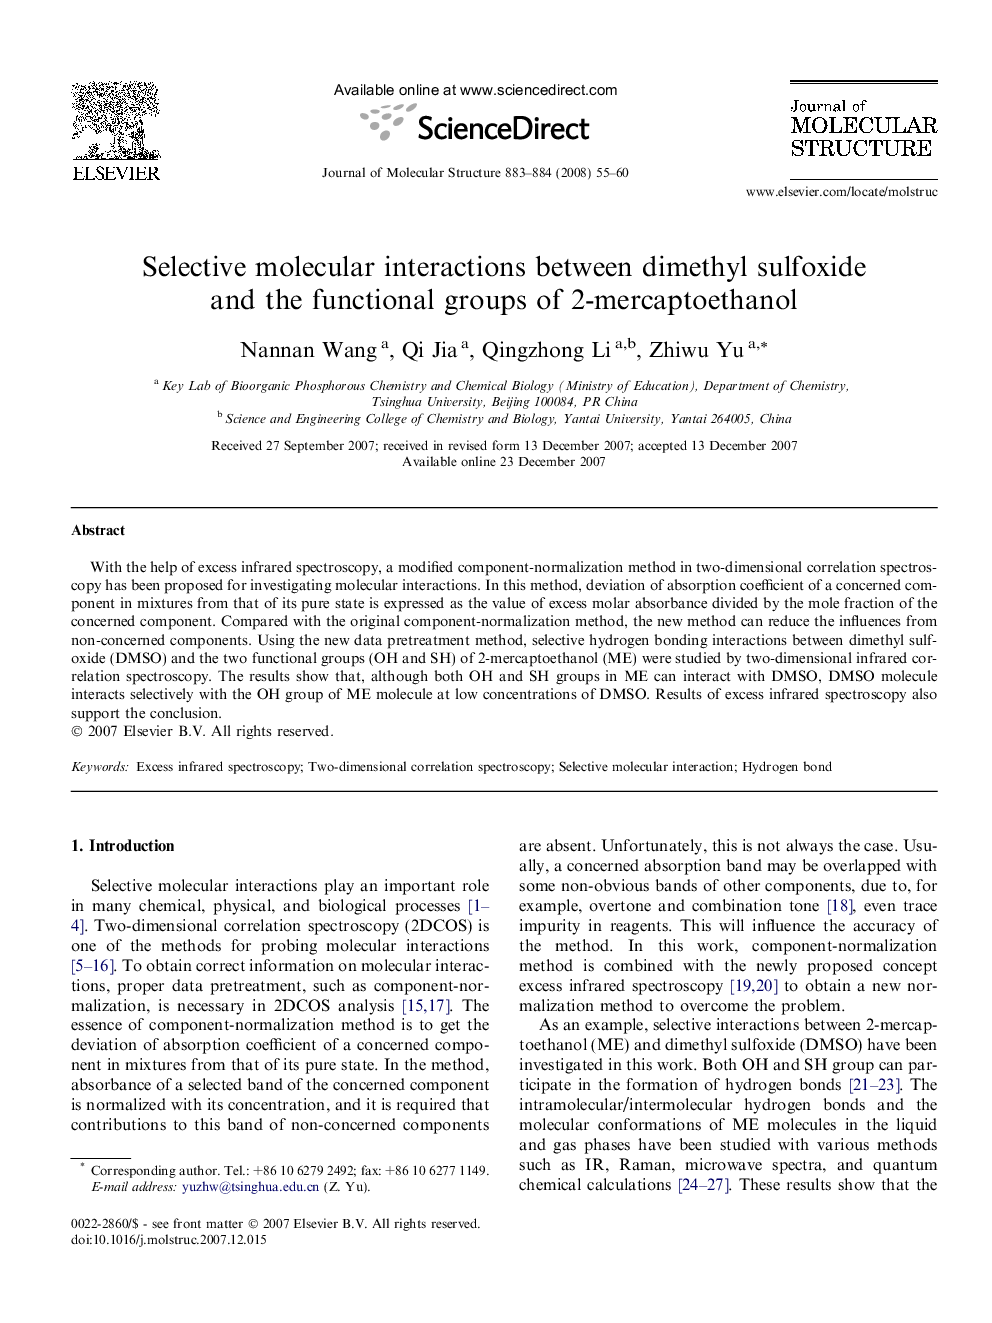 Selective molecular interactions between dimethyl sulfoxide and the functional groups of 2-mercaptoethanol